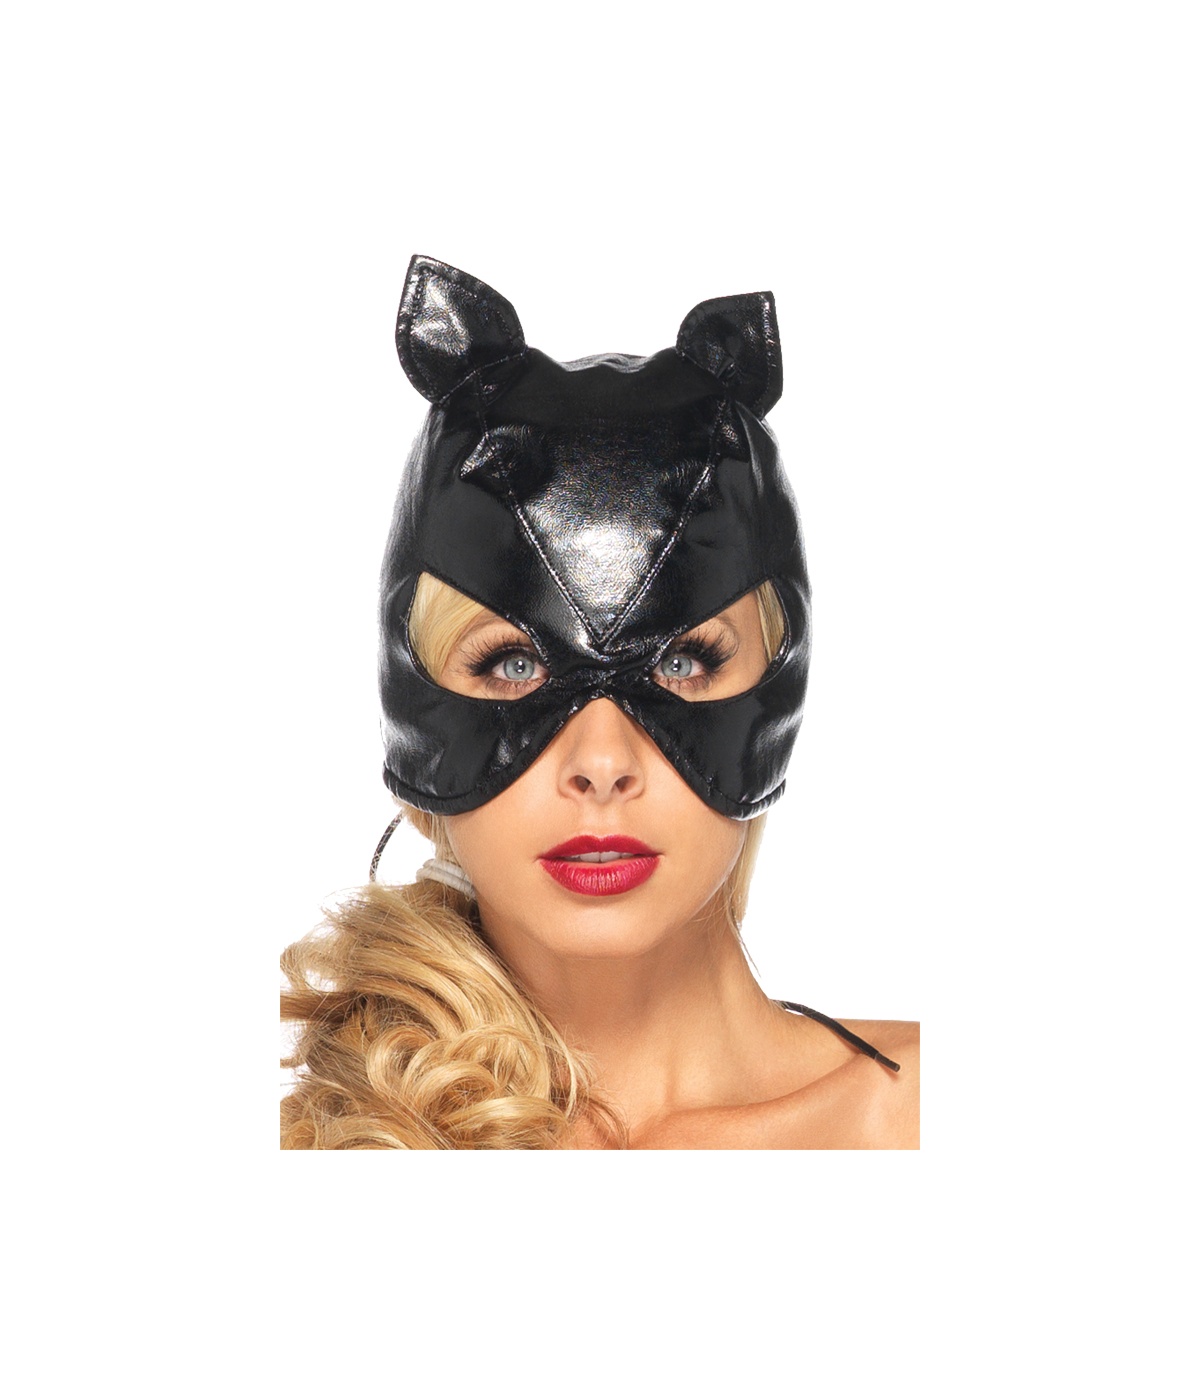  Black Leather Cat Mask